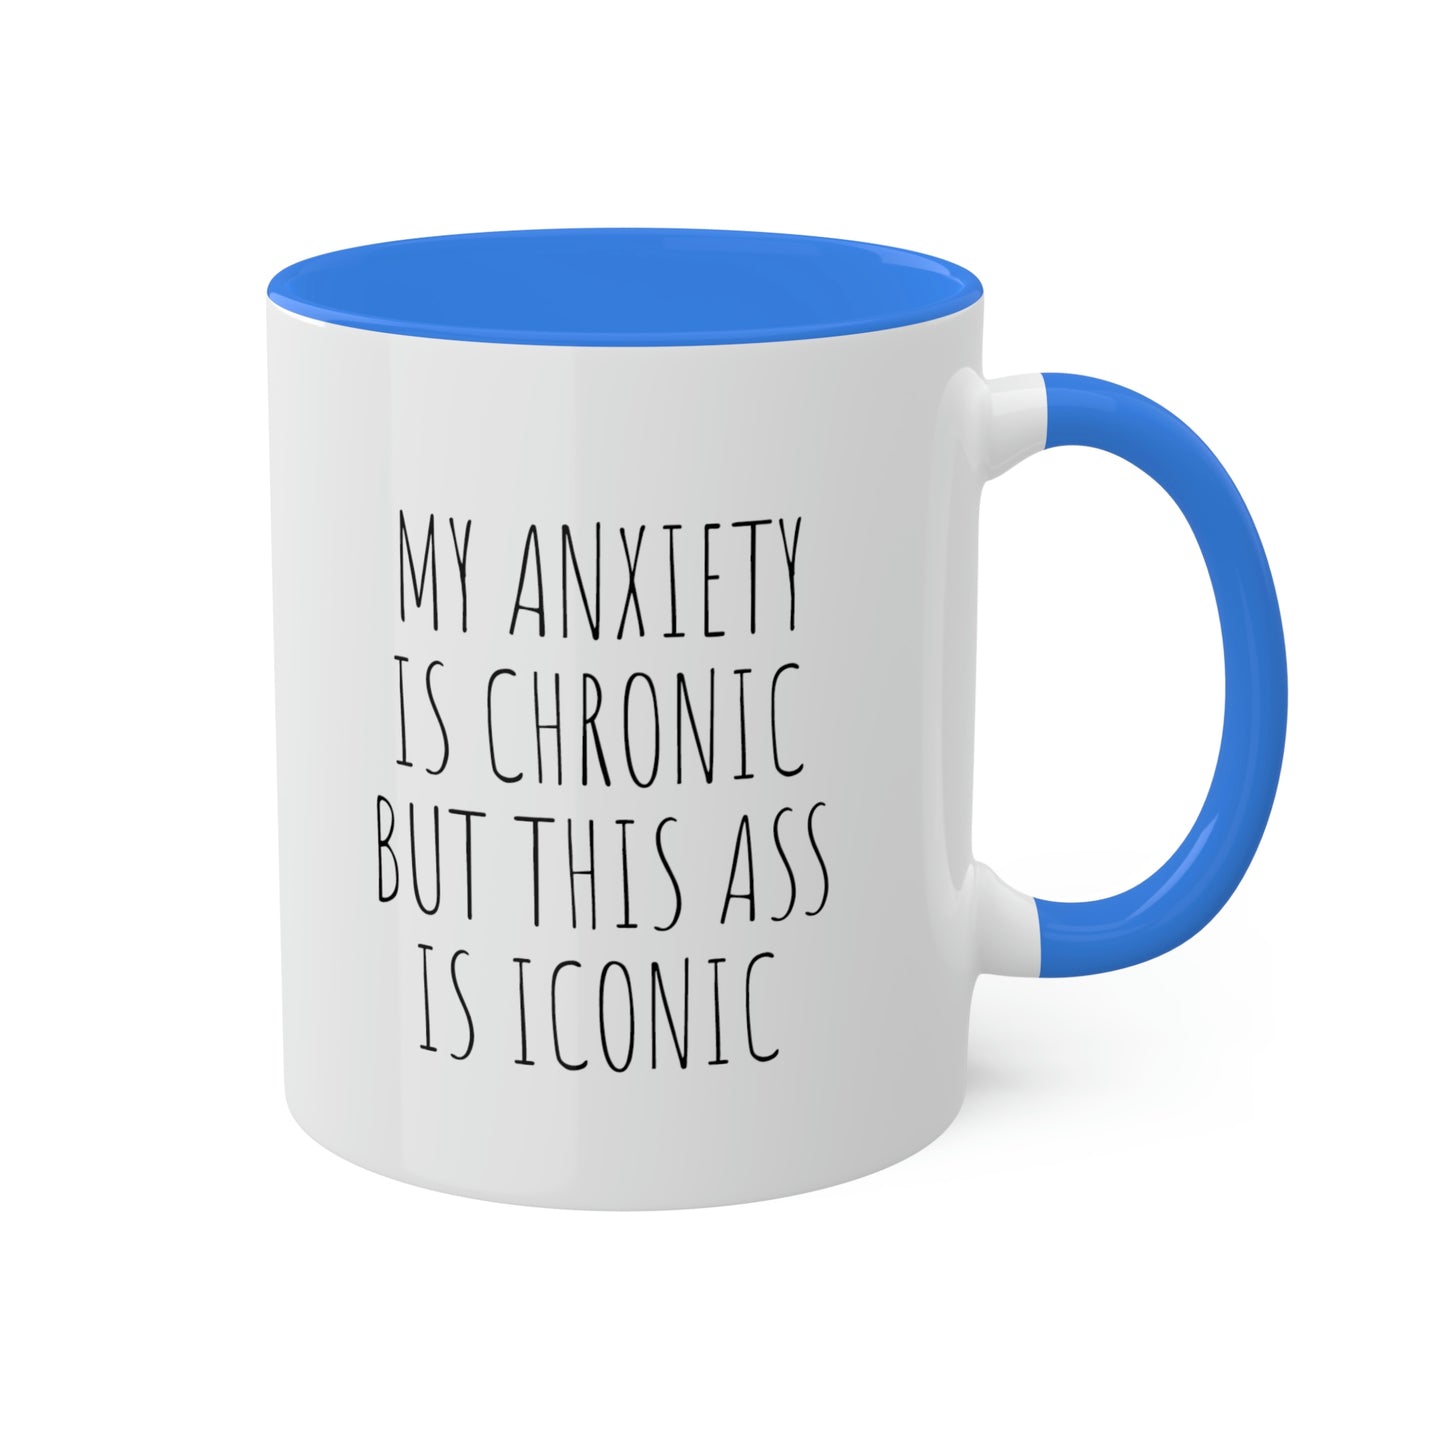 My Anxiety, Colorful Mugs, 11oz